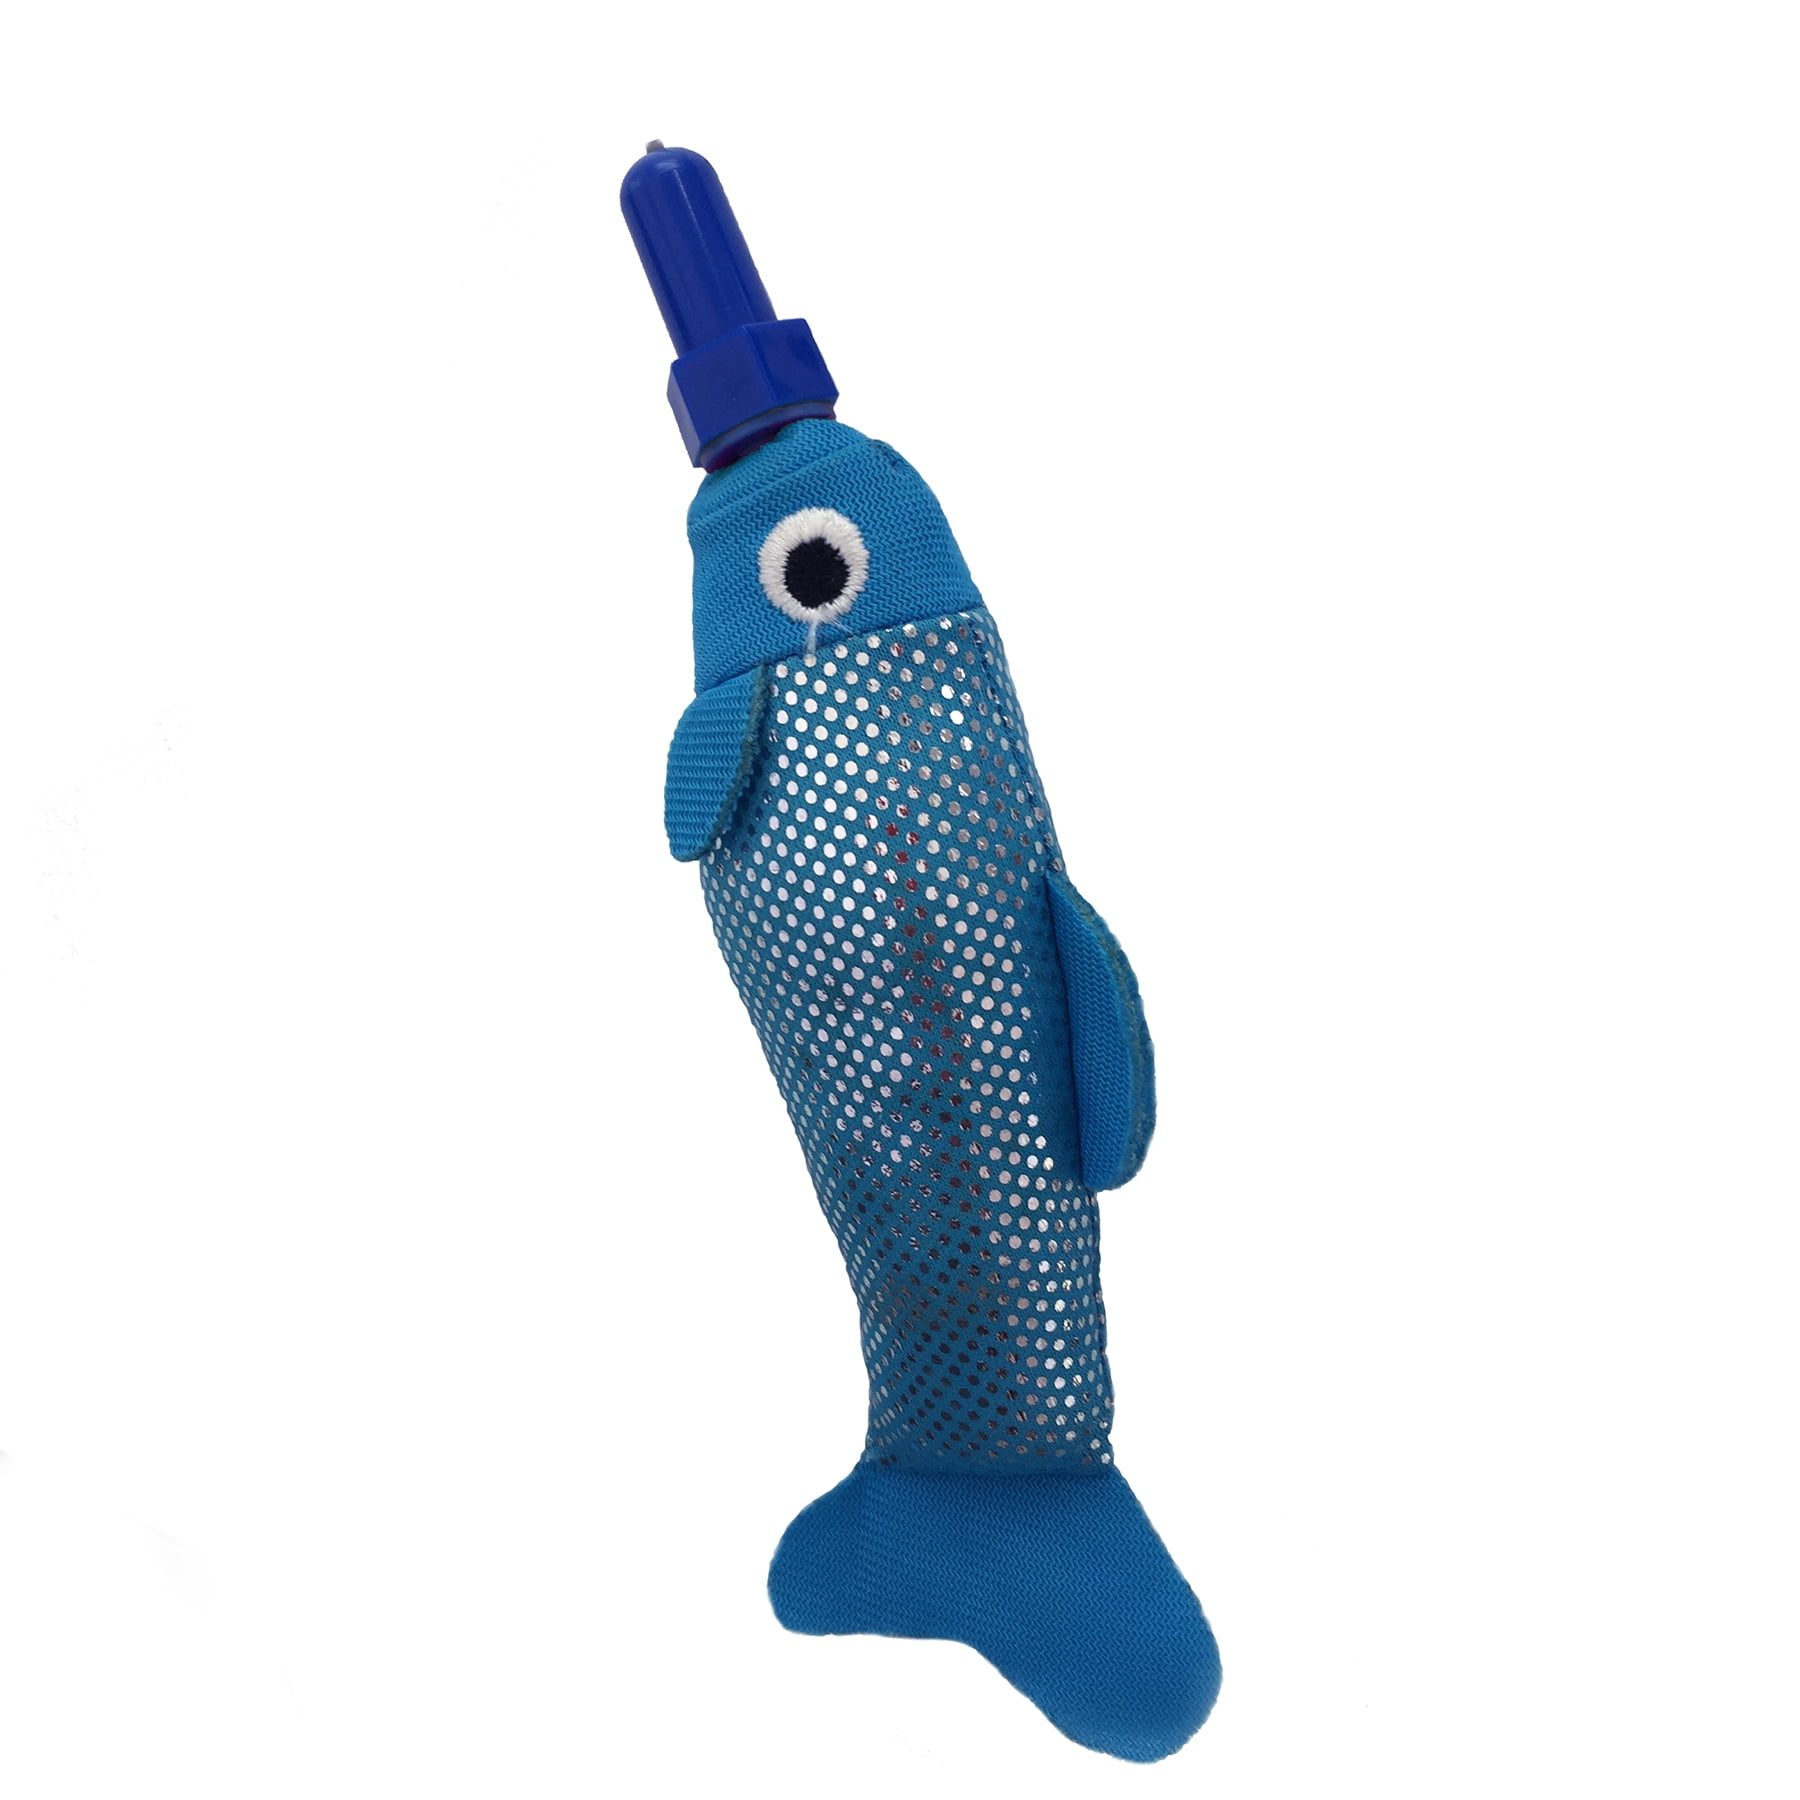 Cat-Fish, cat fishing pole teaser toy 